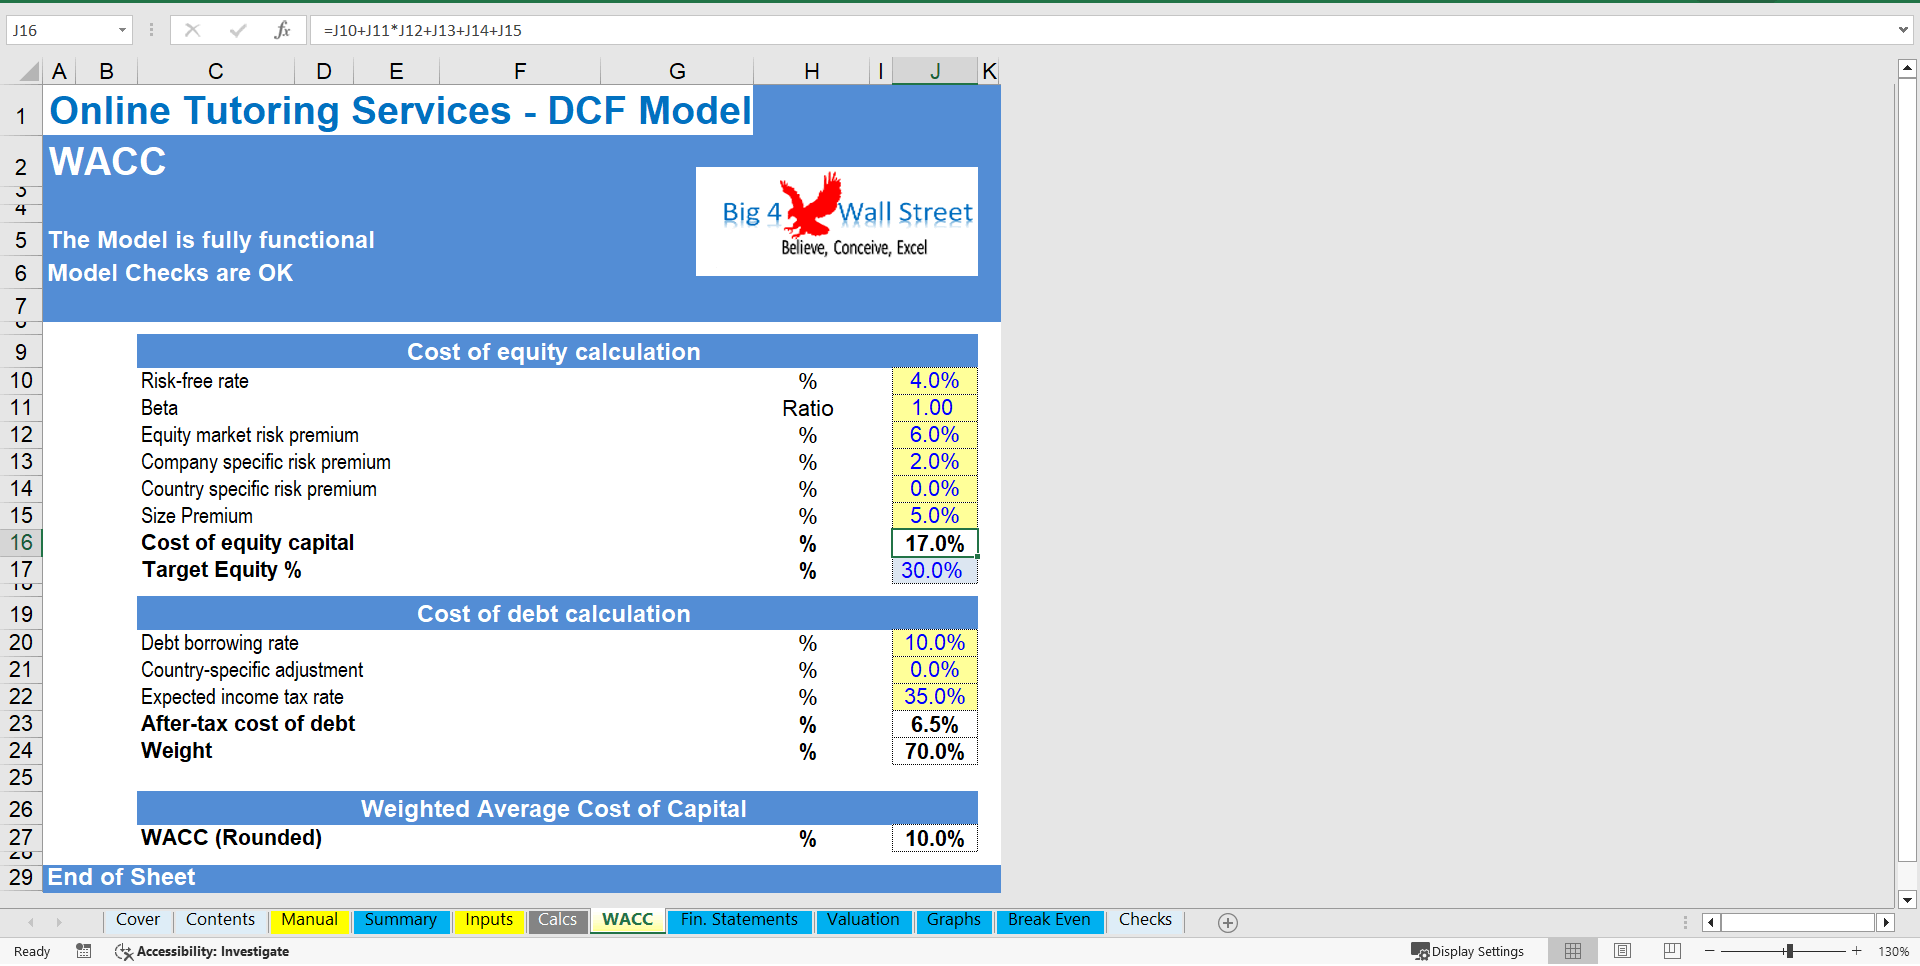 Online Tutoring Services Financial Model (DCF, Valuation) (Excel template (XLSX)) Preview Image